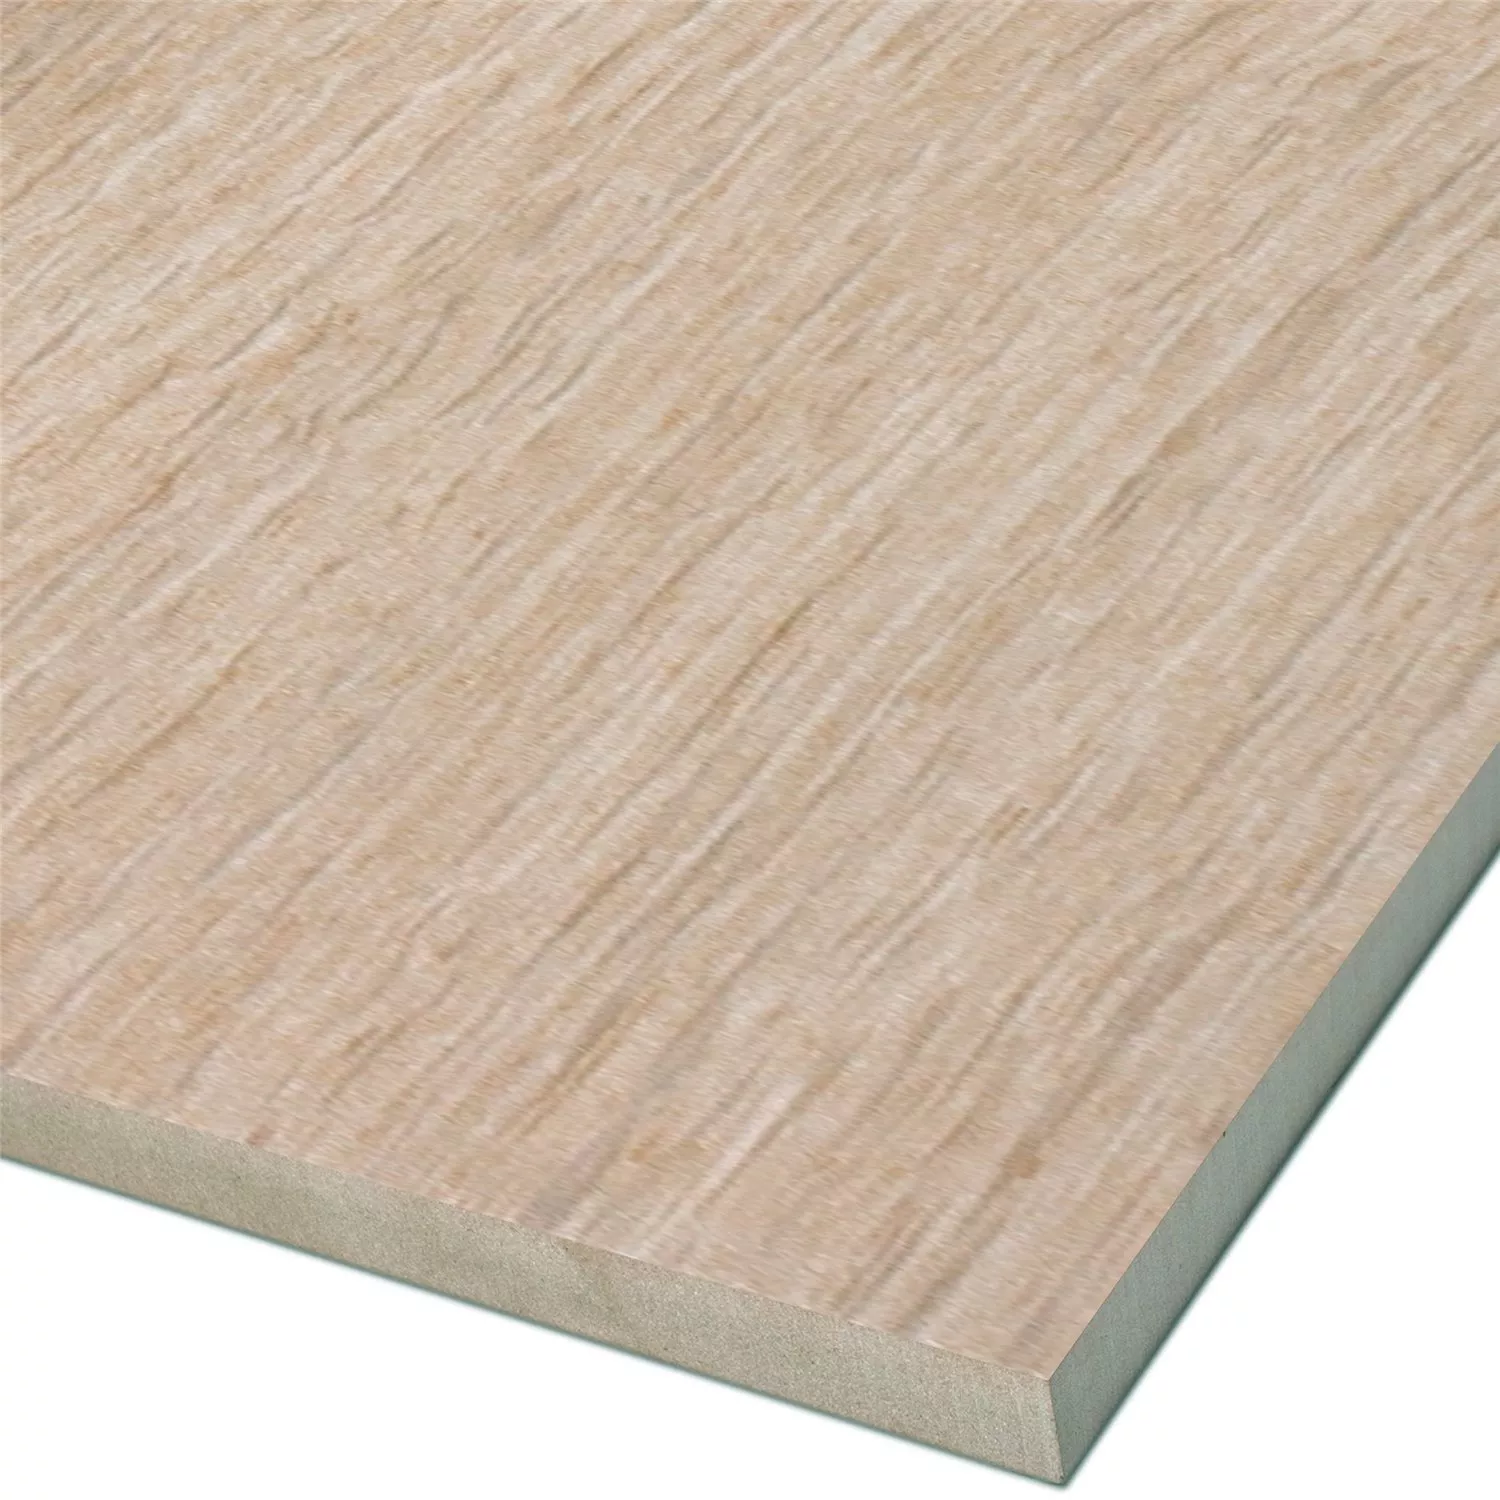 Sample Wood Optic Floor Tiles Eiffel Creme 10x60cm